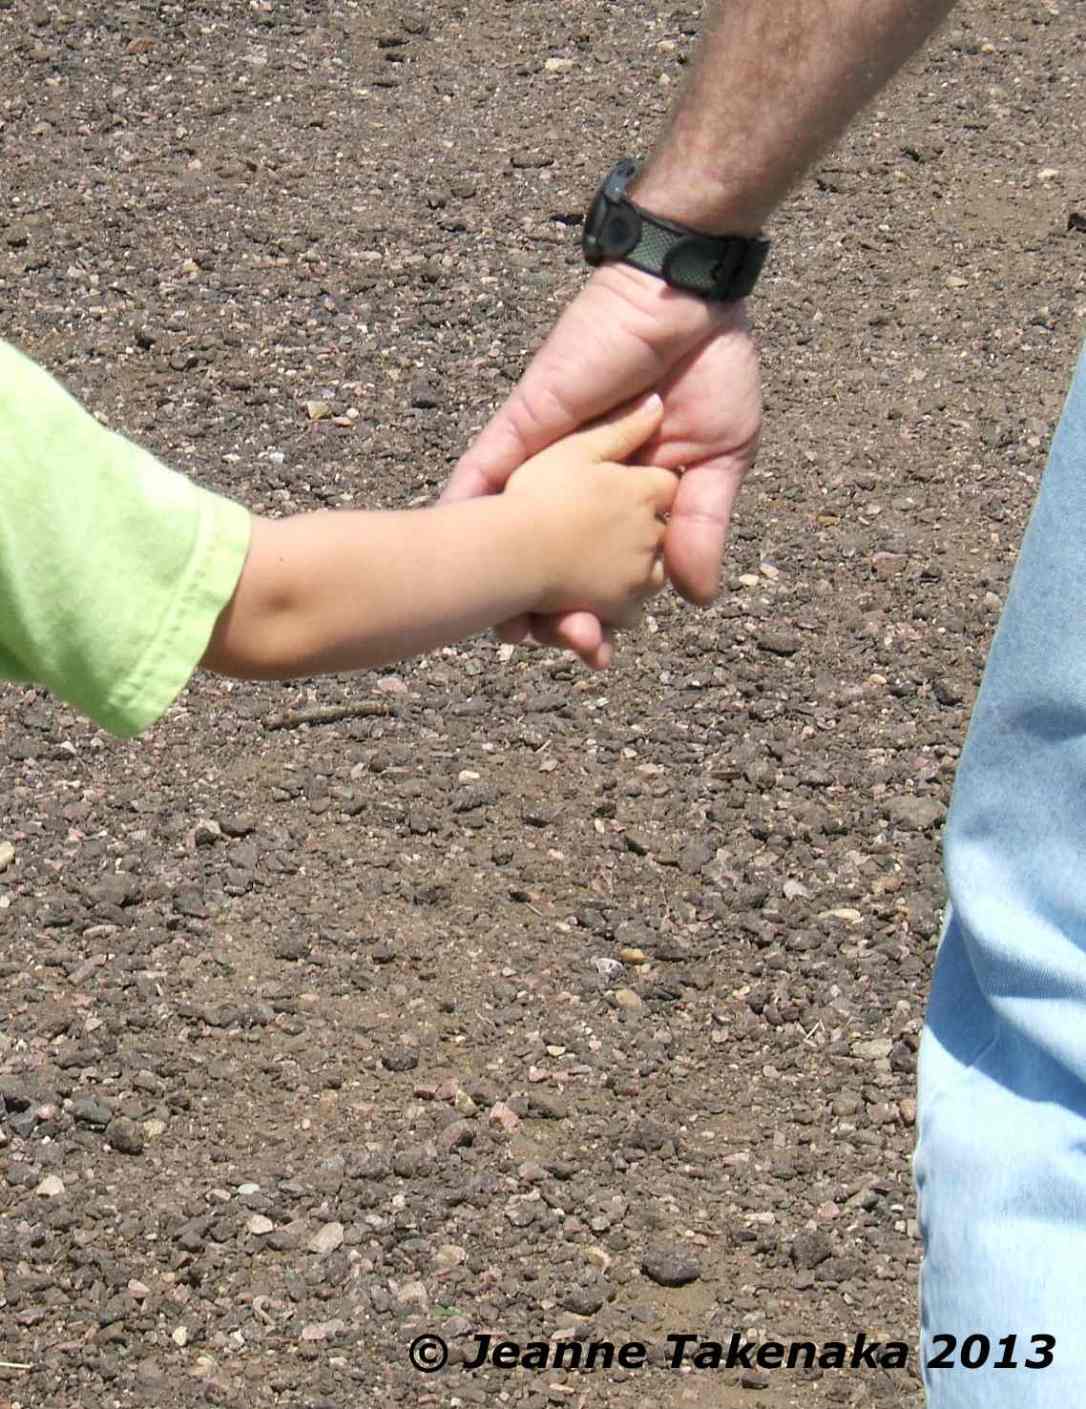 Man child holding hands